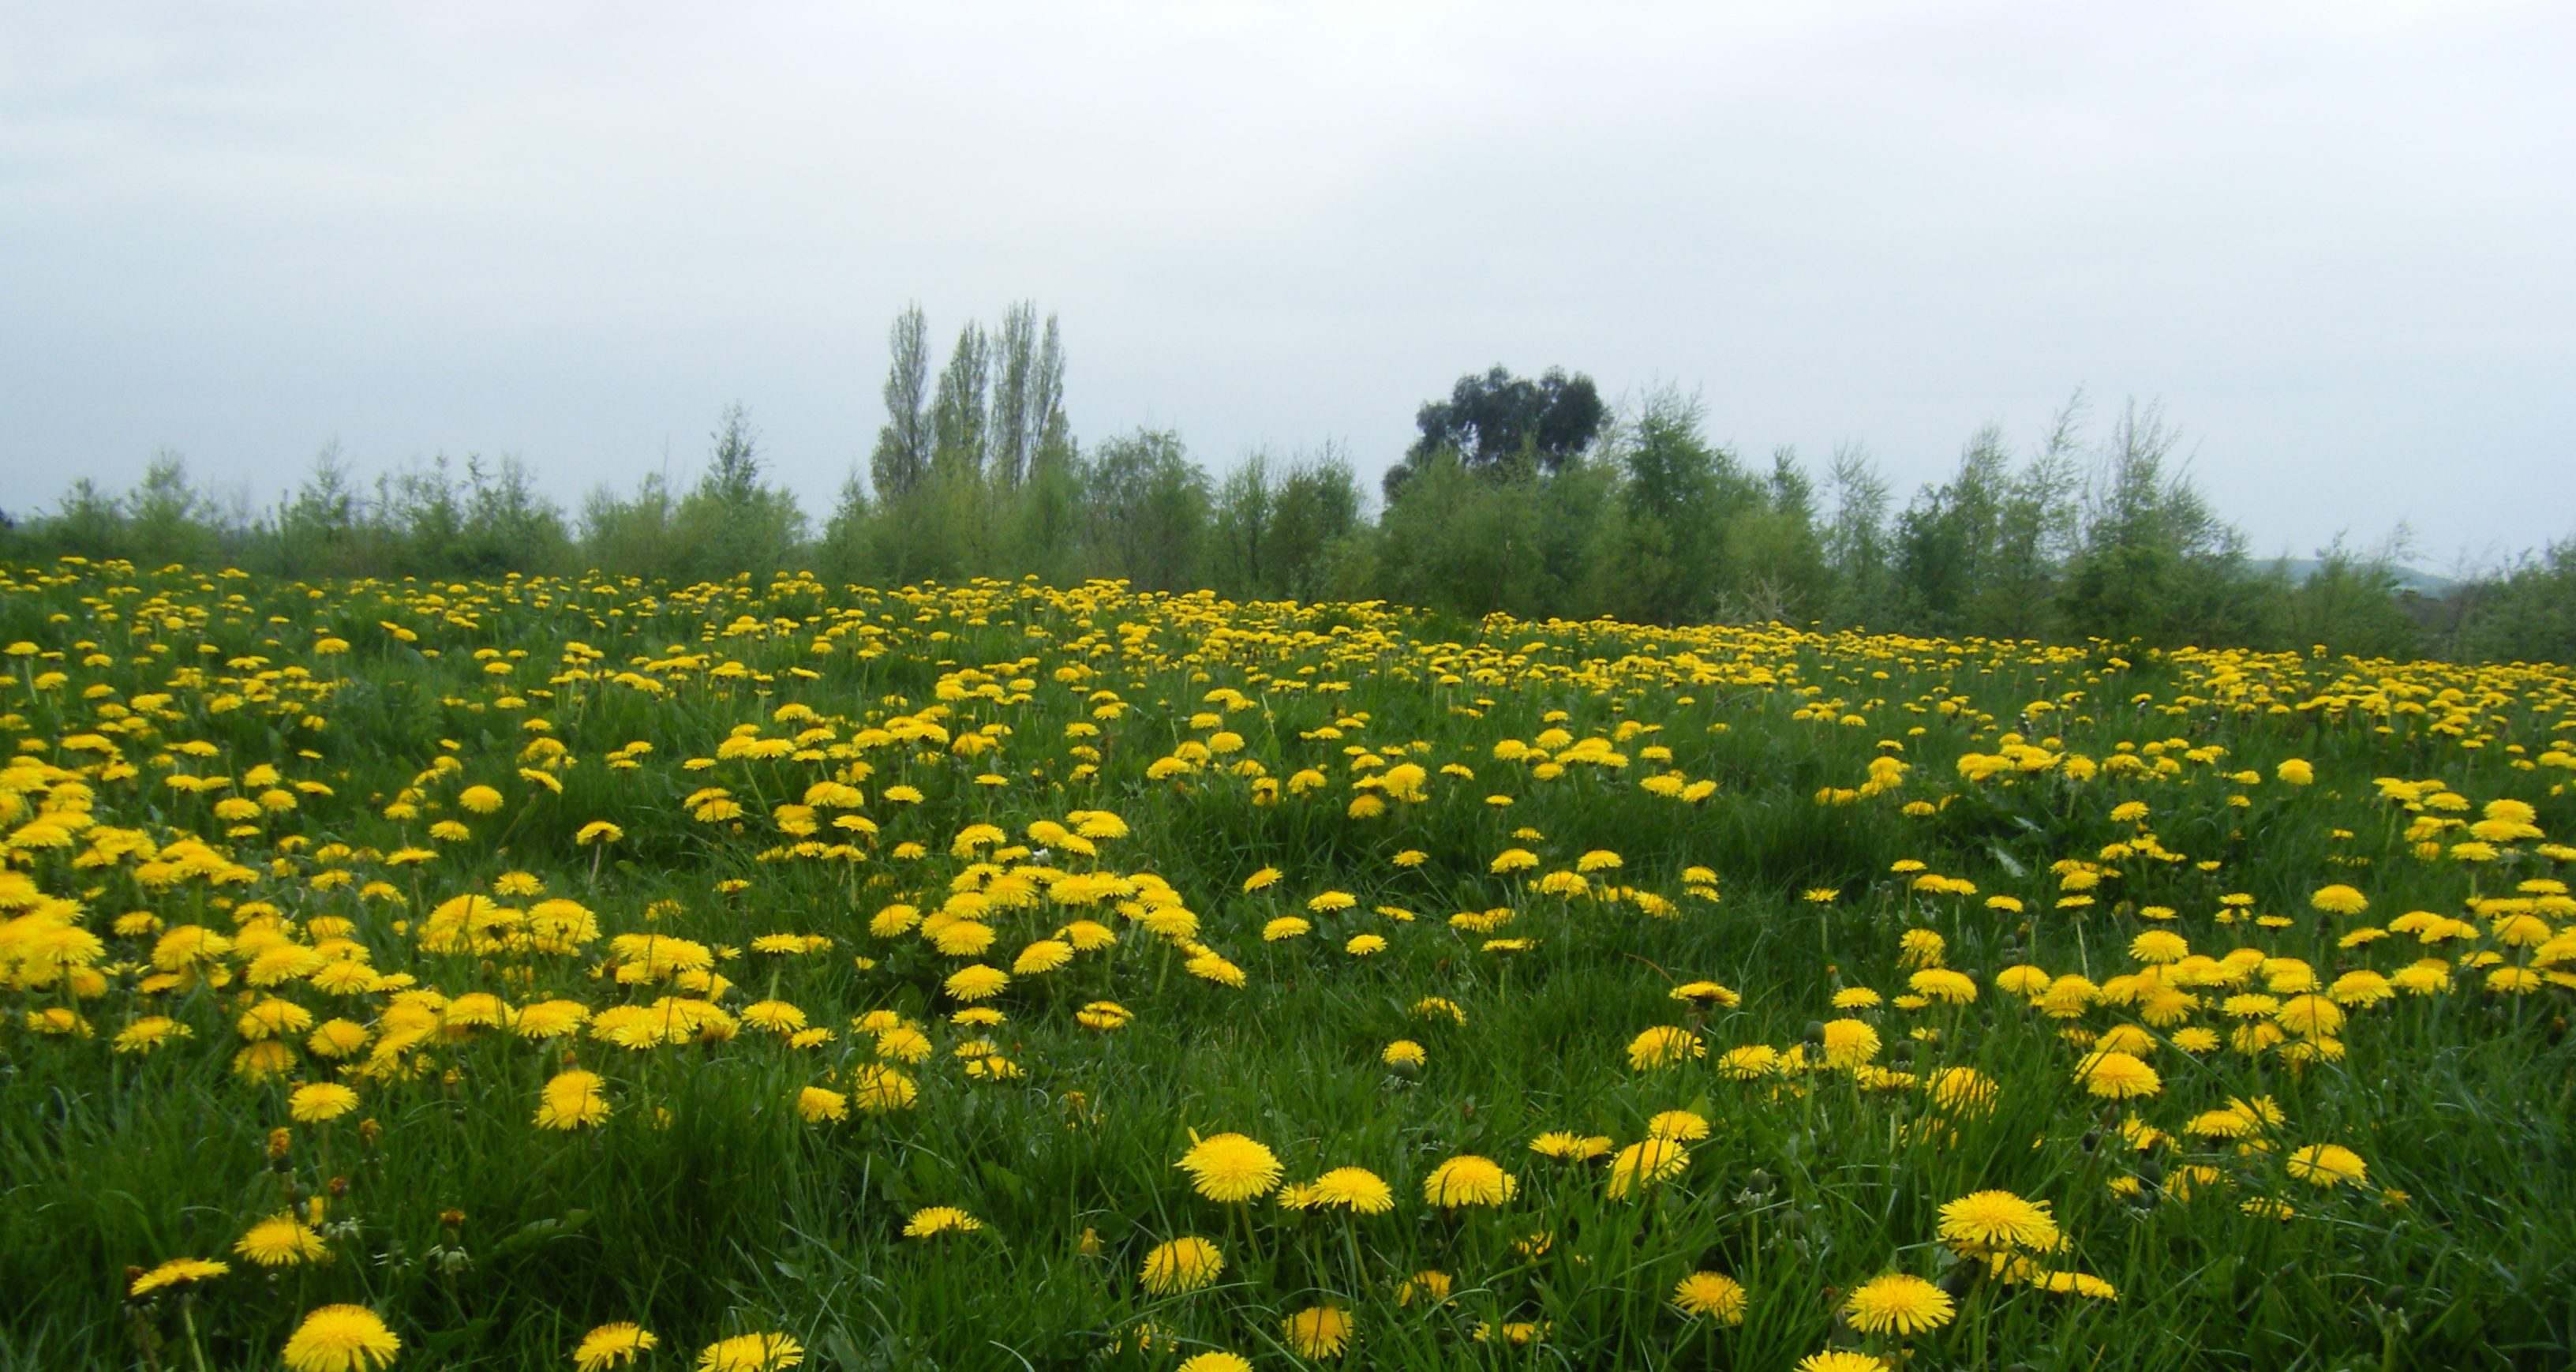 Field of dandelions at Warren House Park